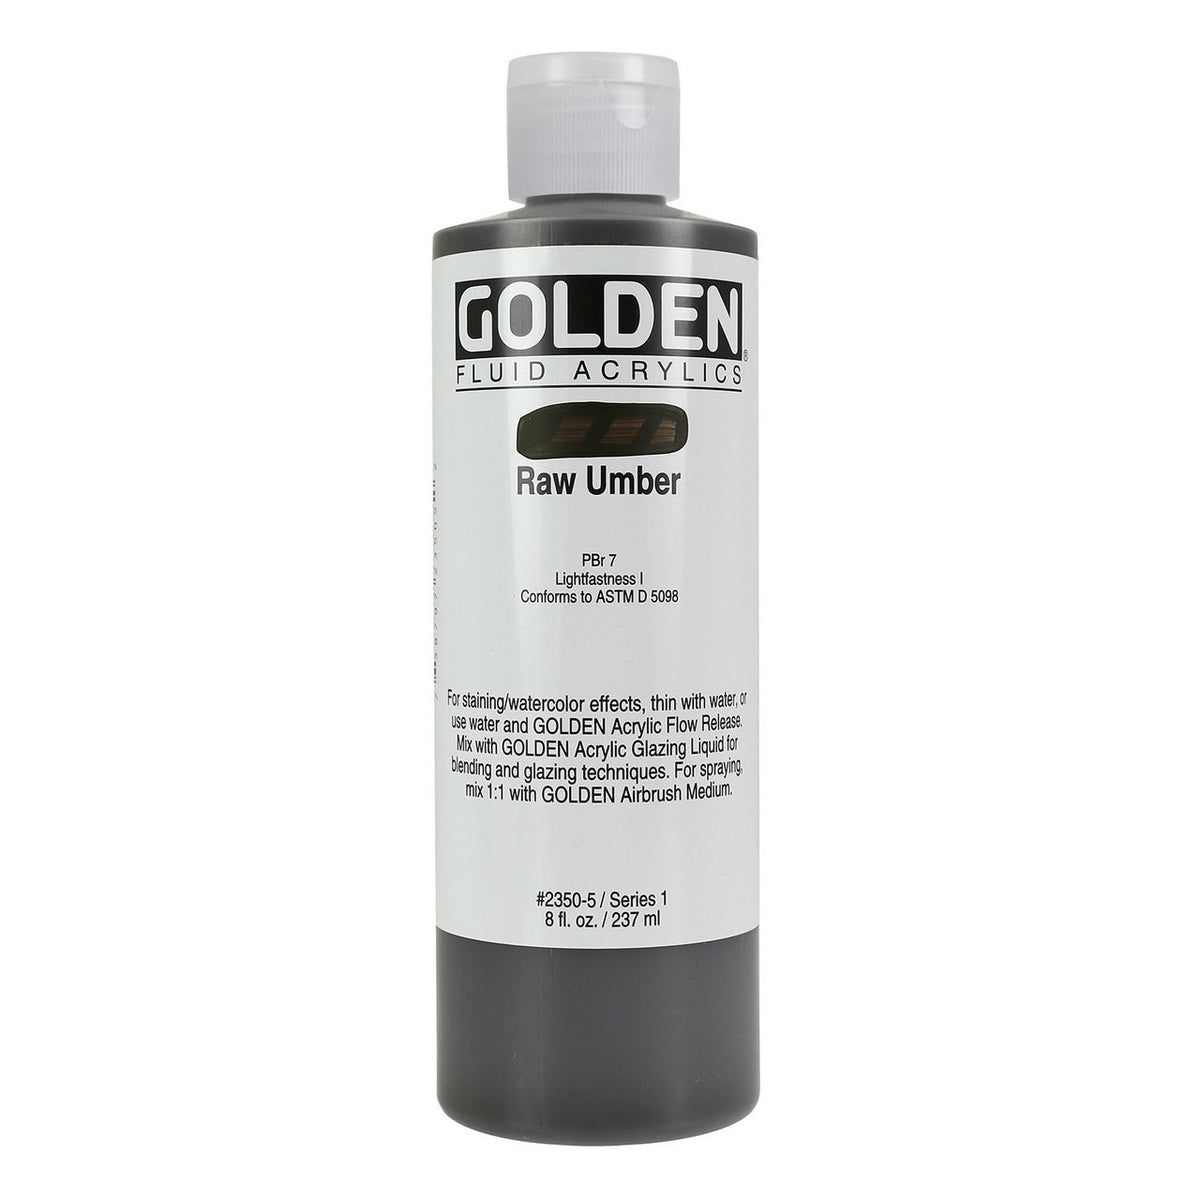 Golden Molding Paste - 8 oz.